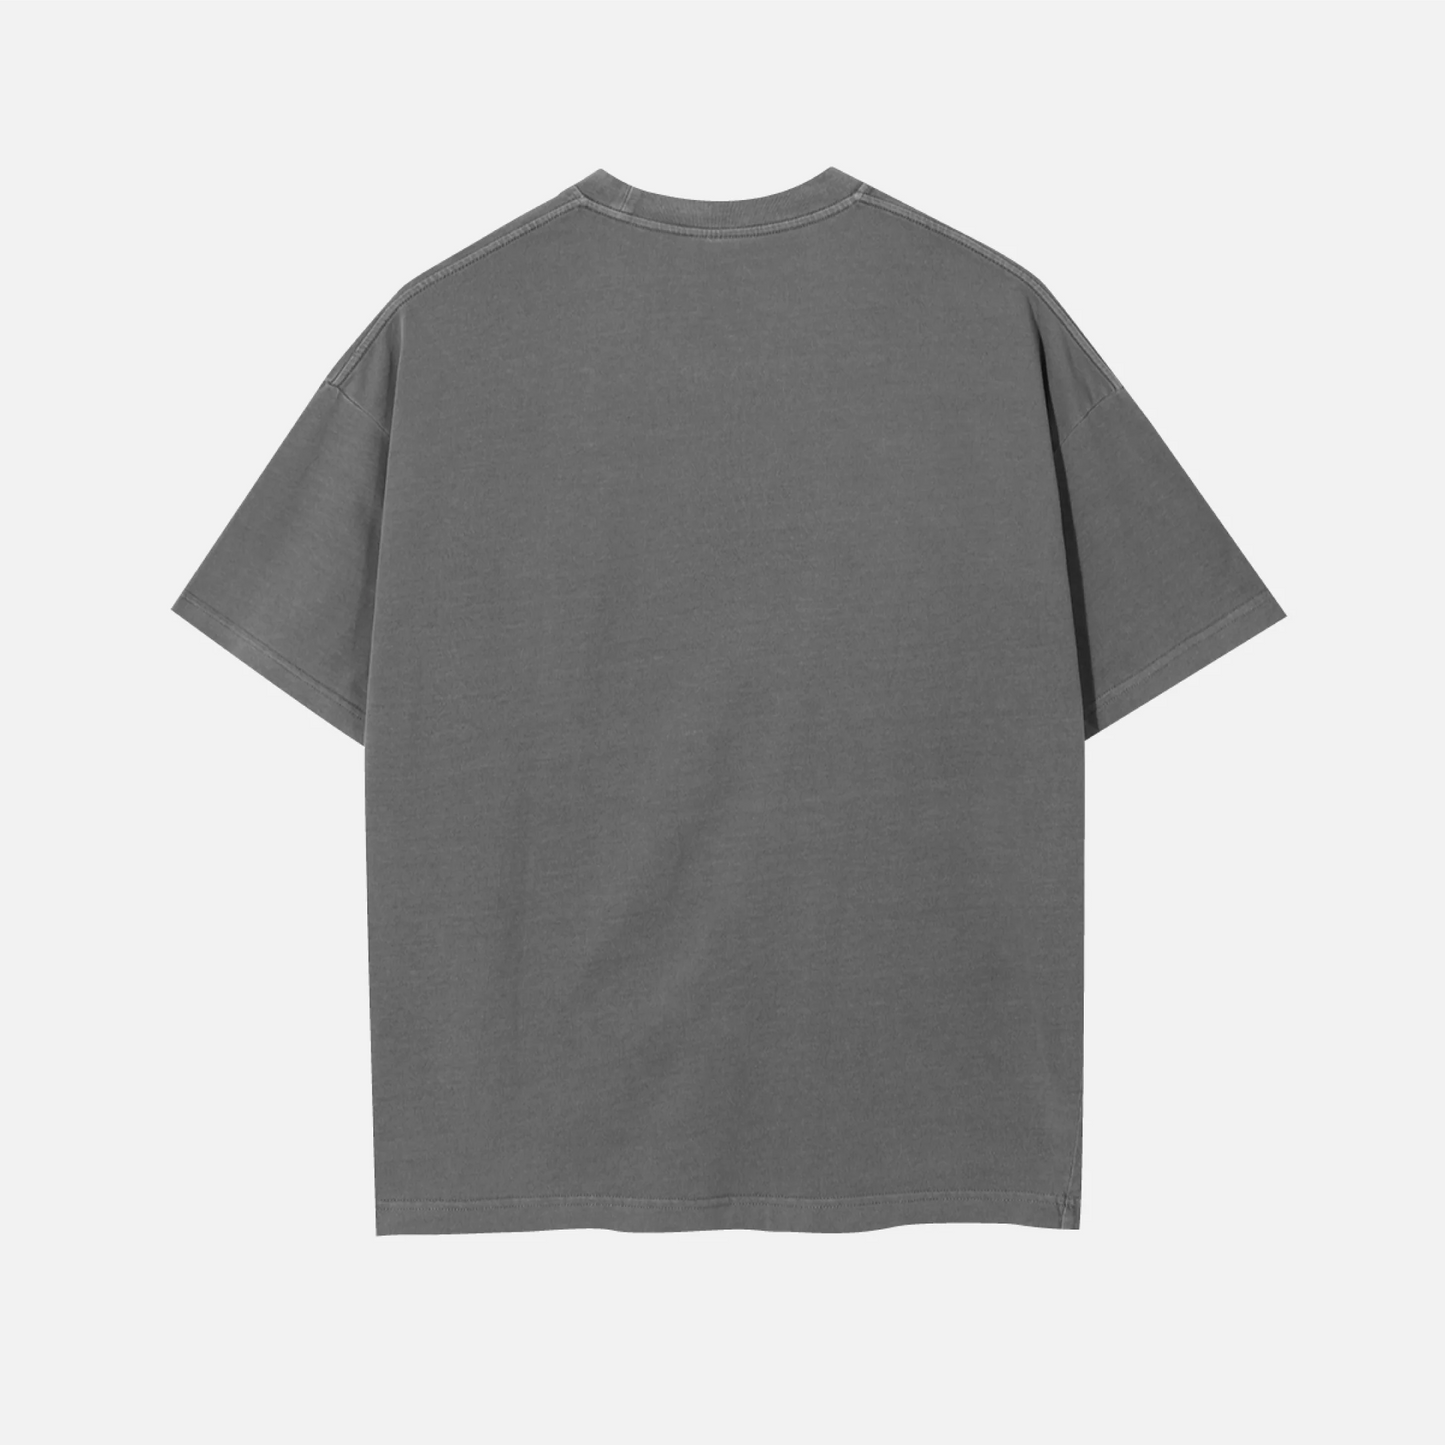 Camera T-shirt grey